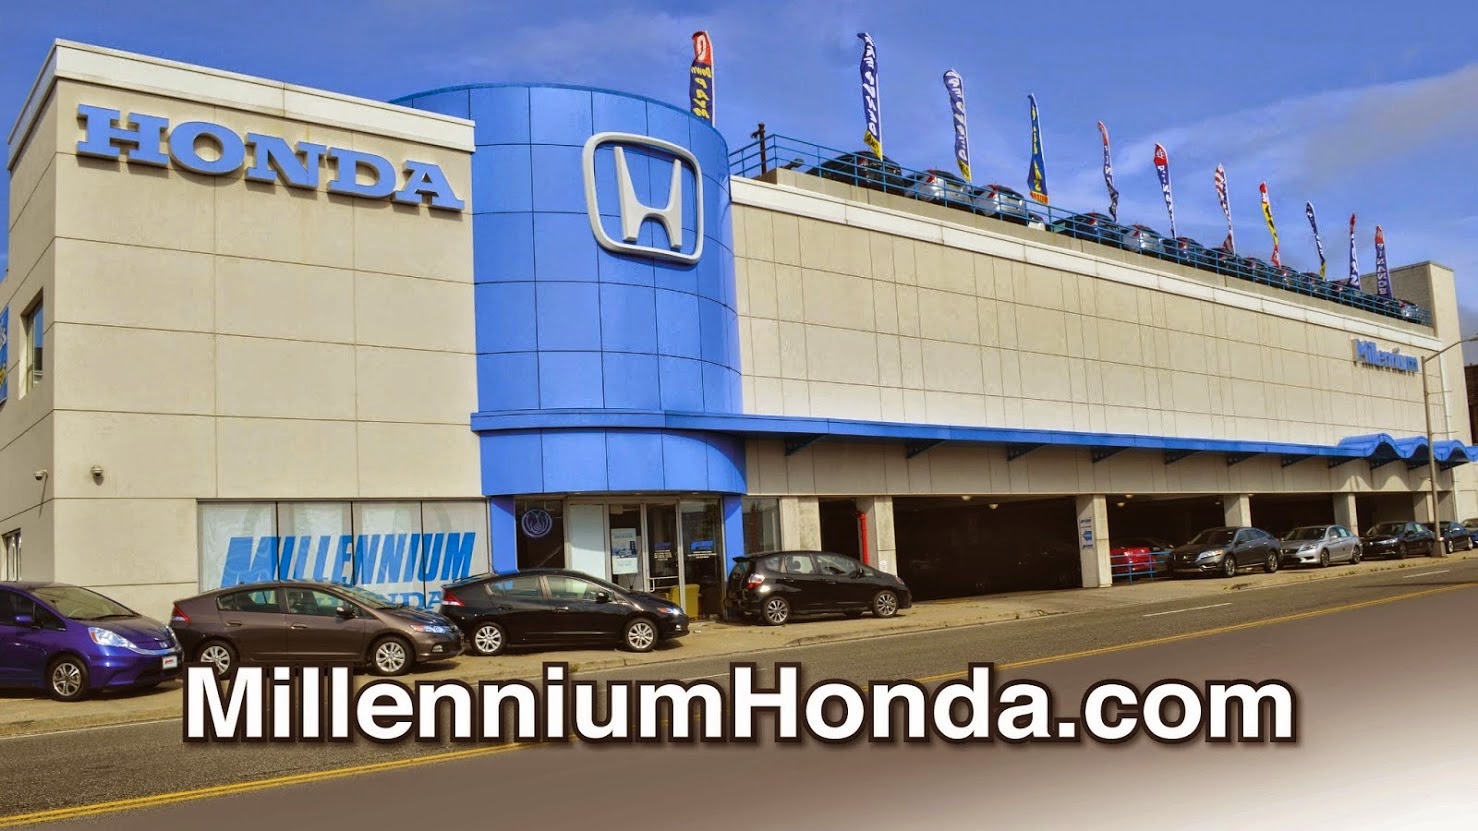 Photo of Millennium Honda in Hempstead City, New York, United States - 3 Picture of Point of interest, Establishment, Car dealer, Store